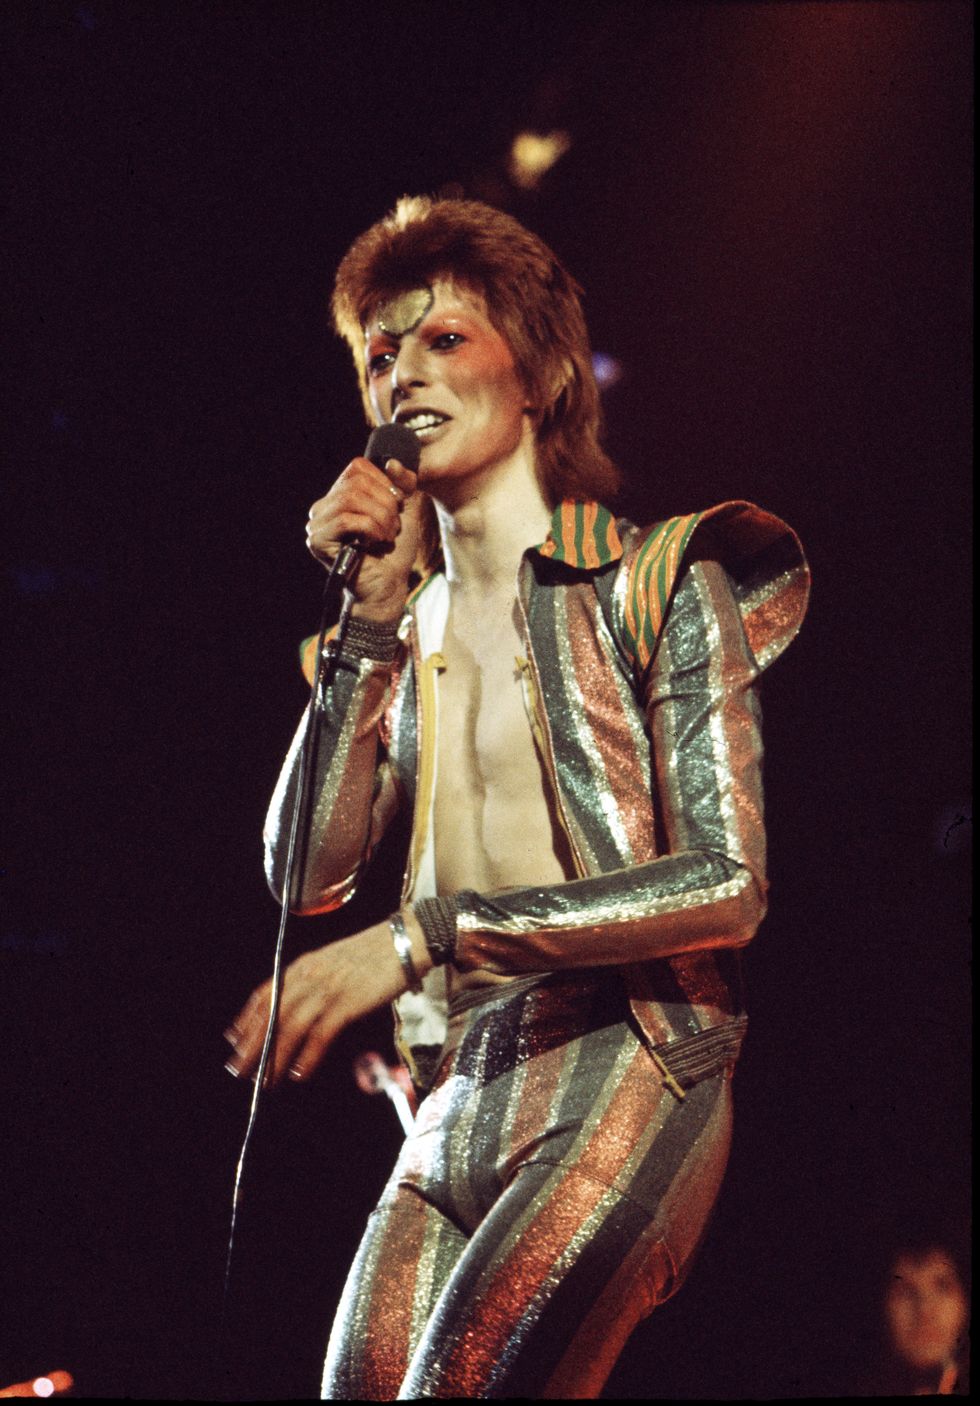 David Bowie on stage | ELLE UK